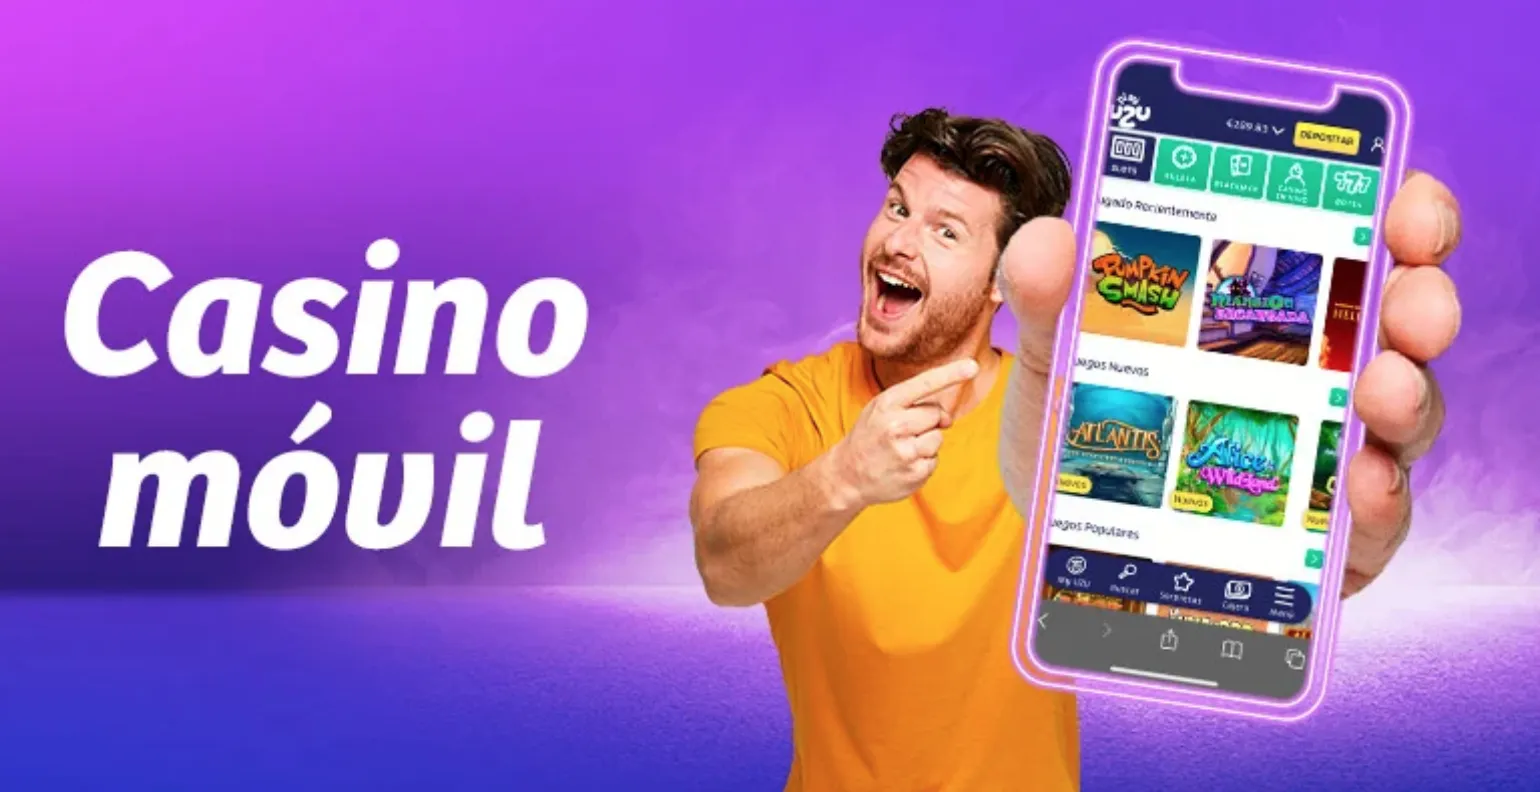 Casino móvil en Playuzu México